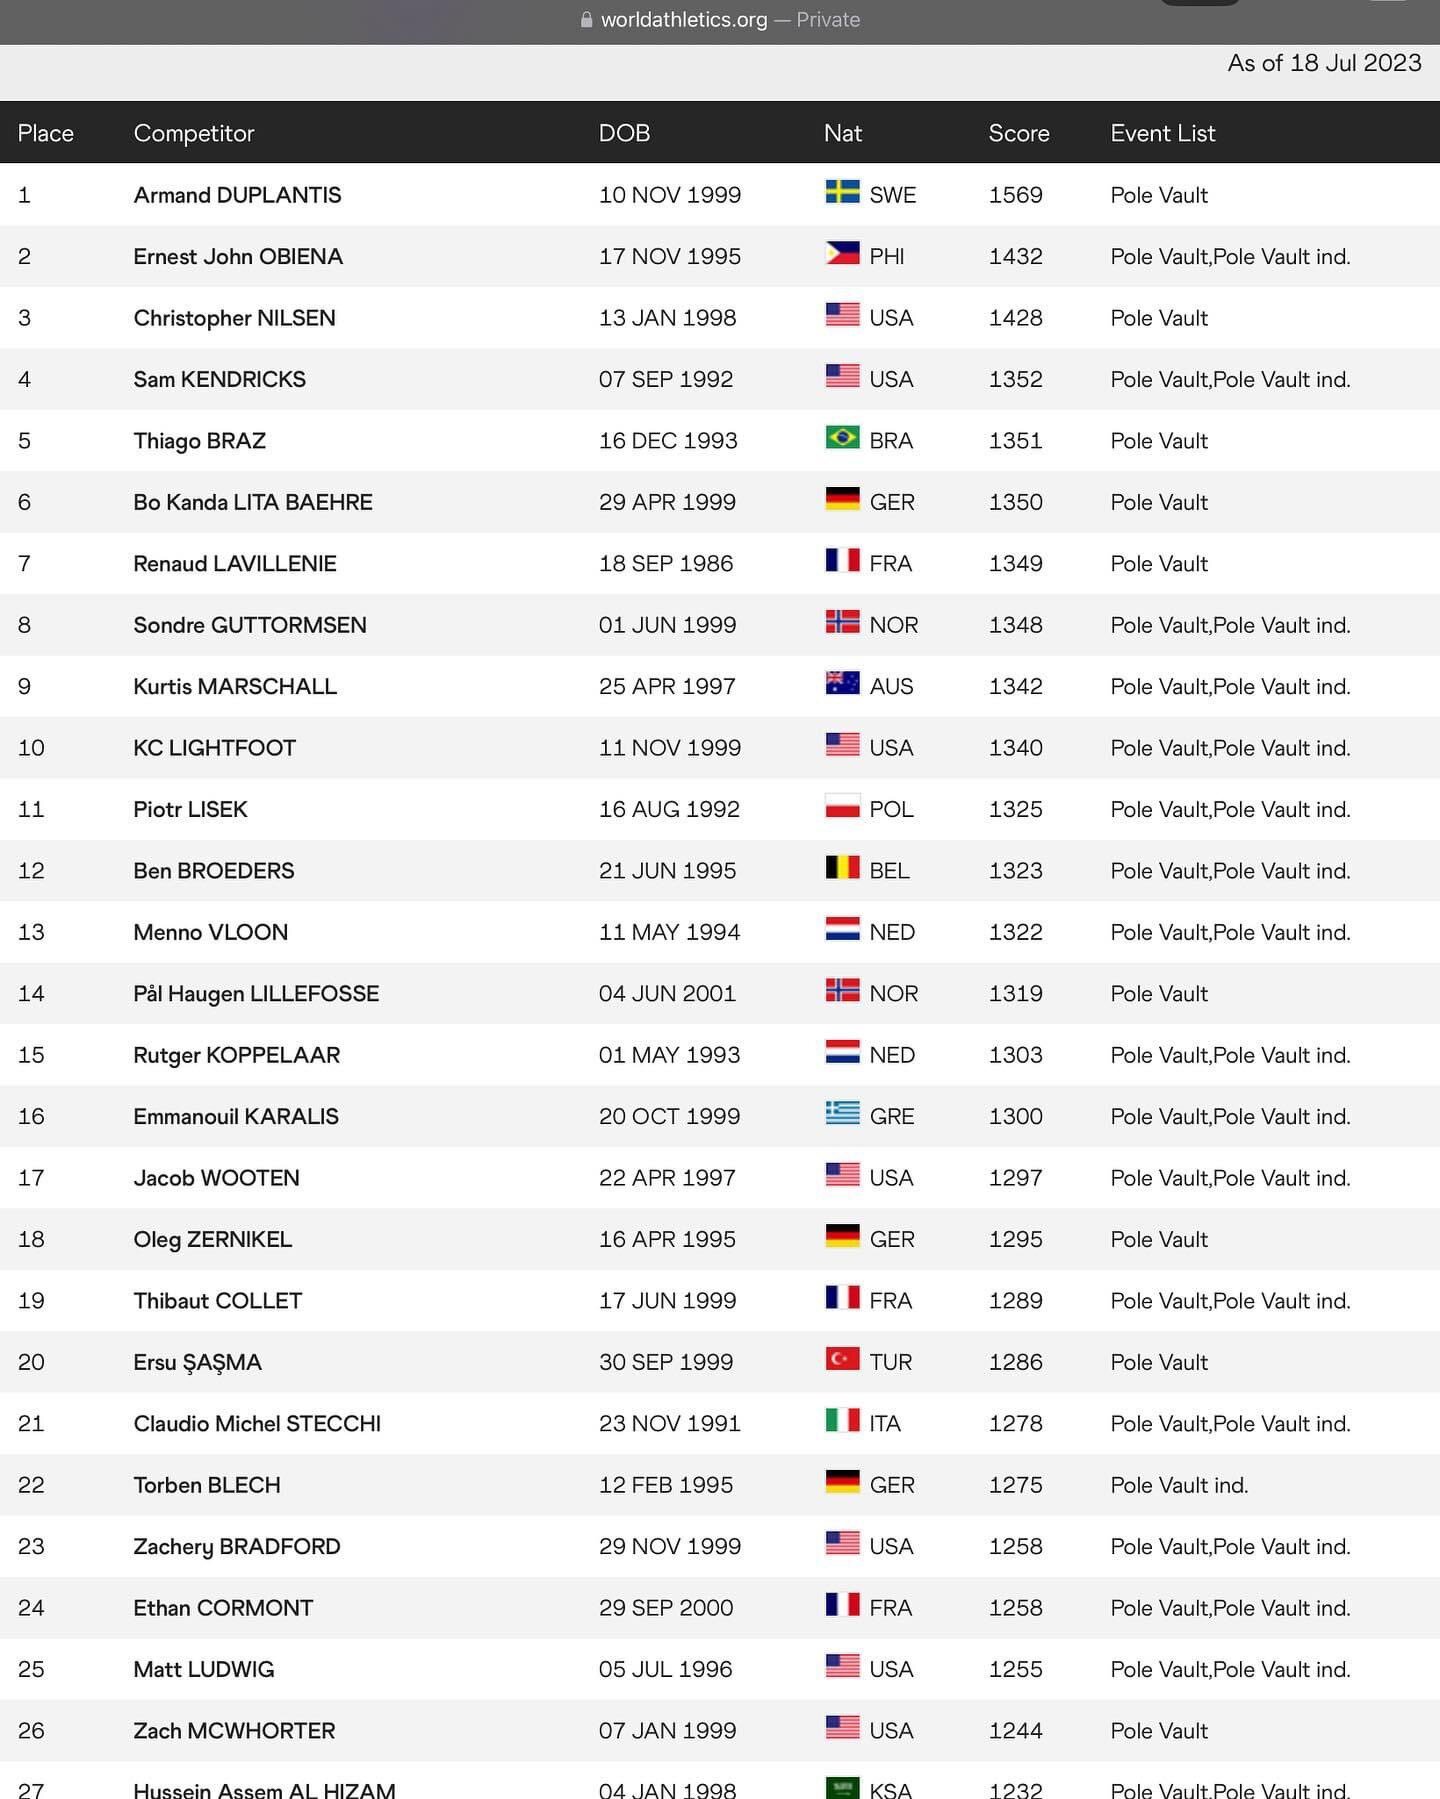 EJ Obiena world number 2 -pole vaulter list